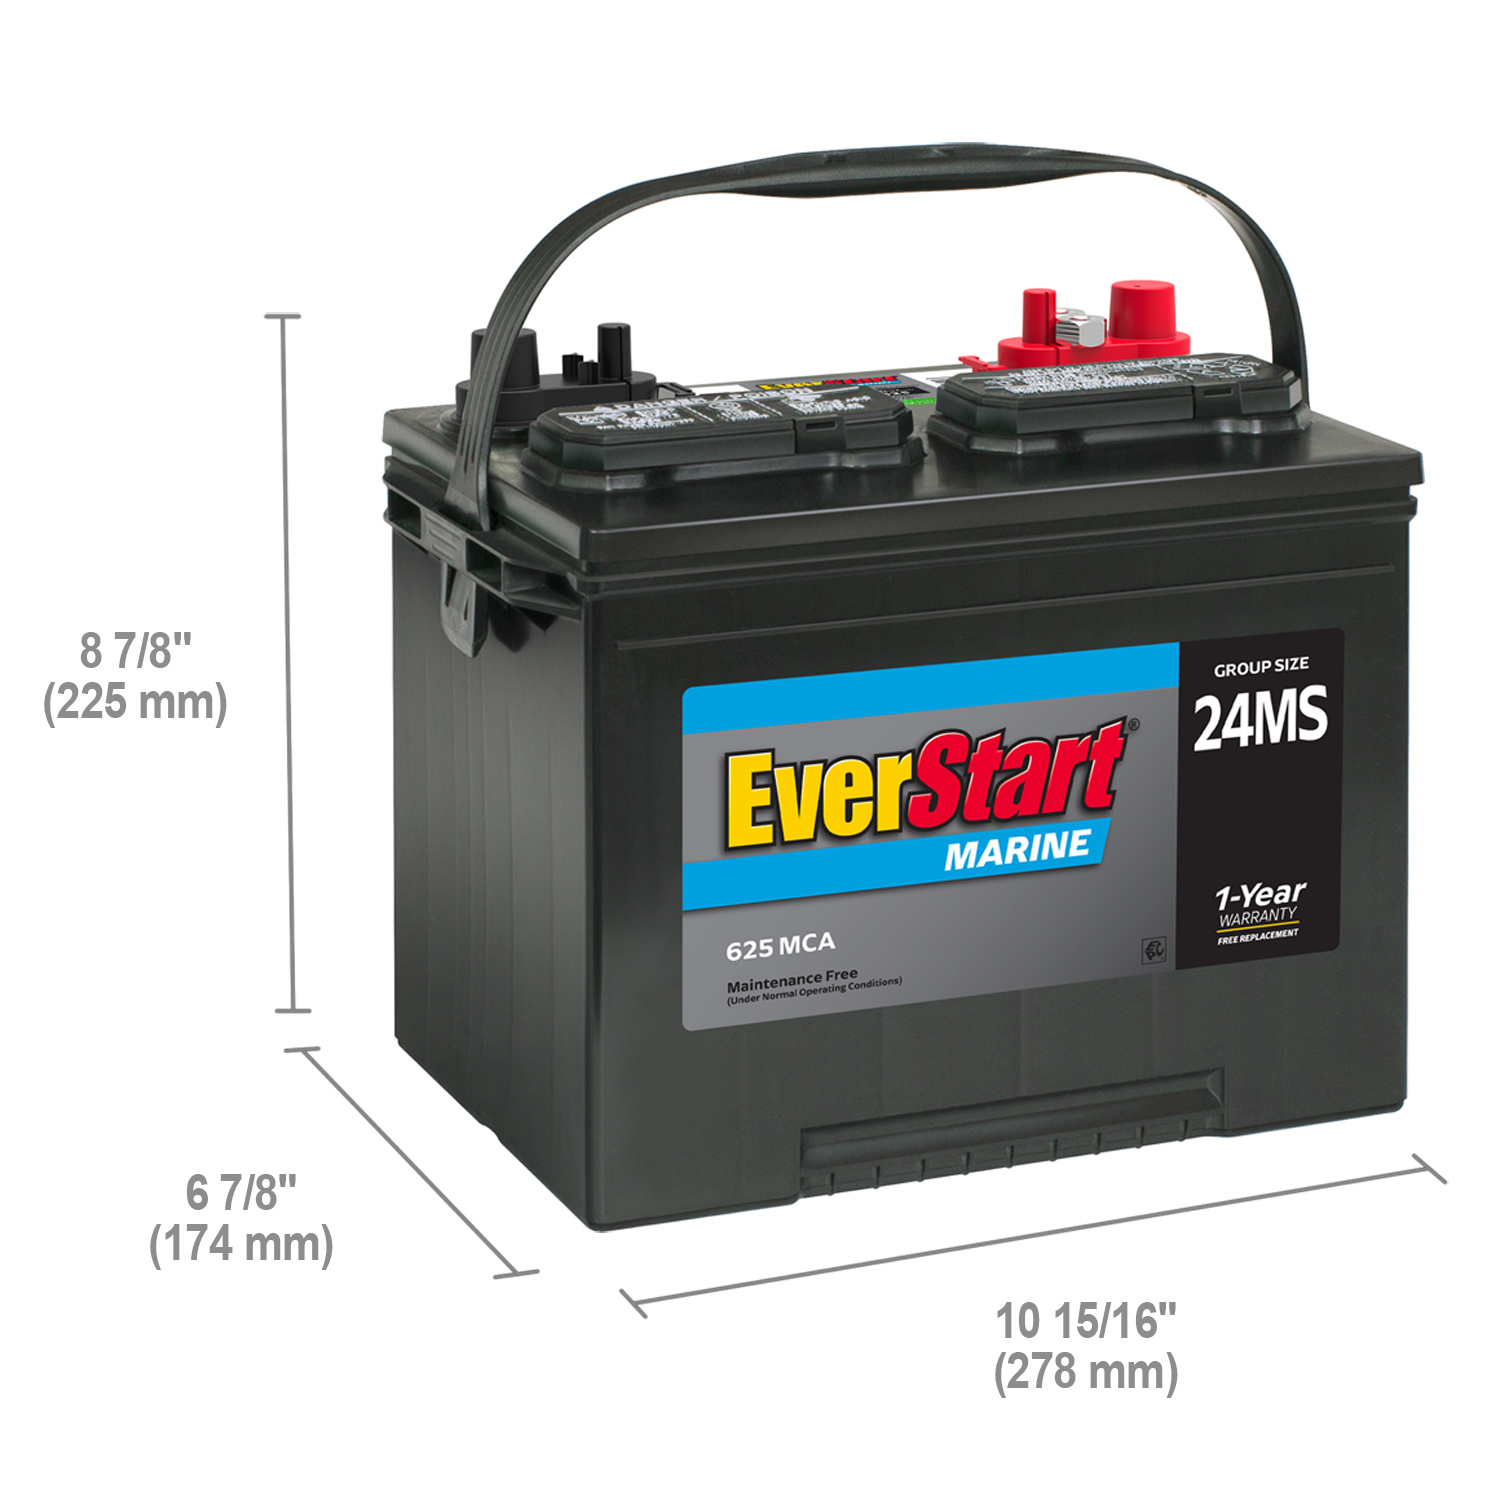 EverStart Lead Acid Marine Starting Battery, Group Size 24MS 12 Volt, 625 MCA - image 2 of 7